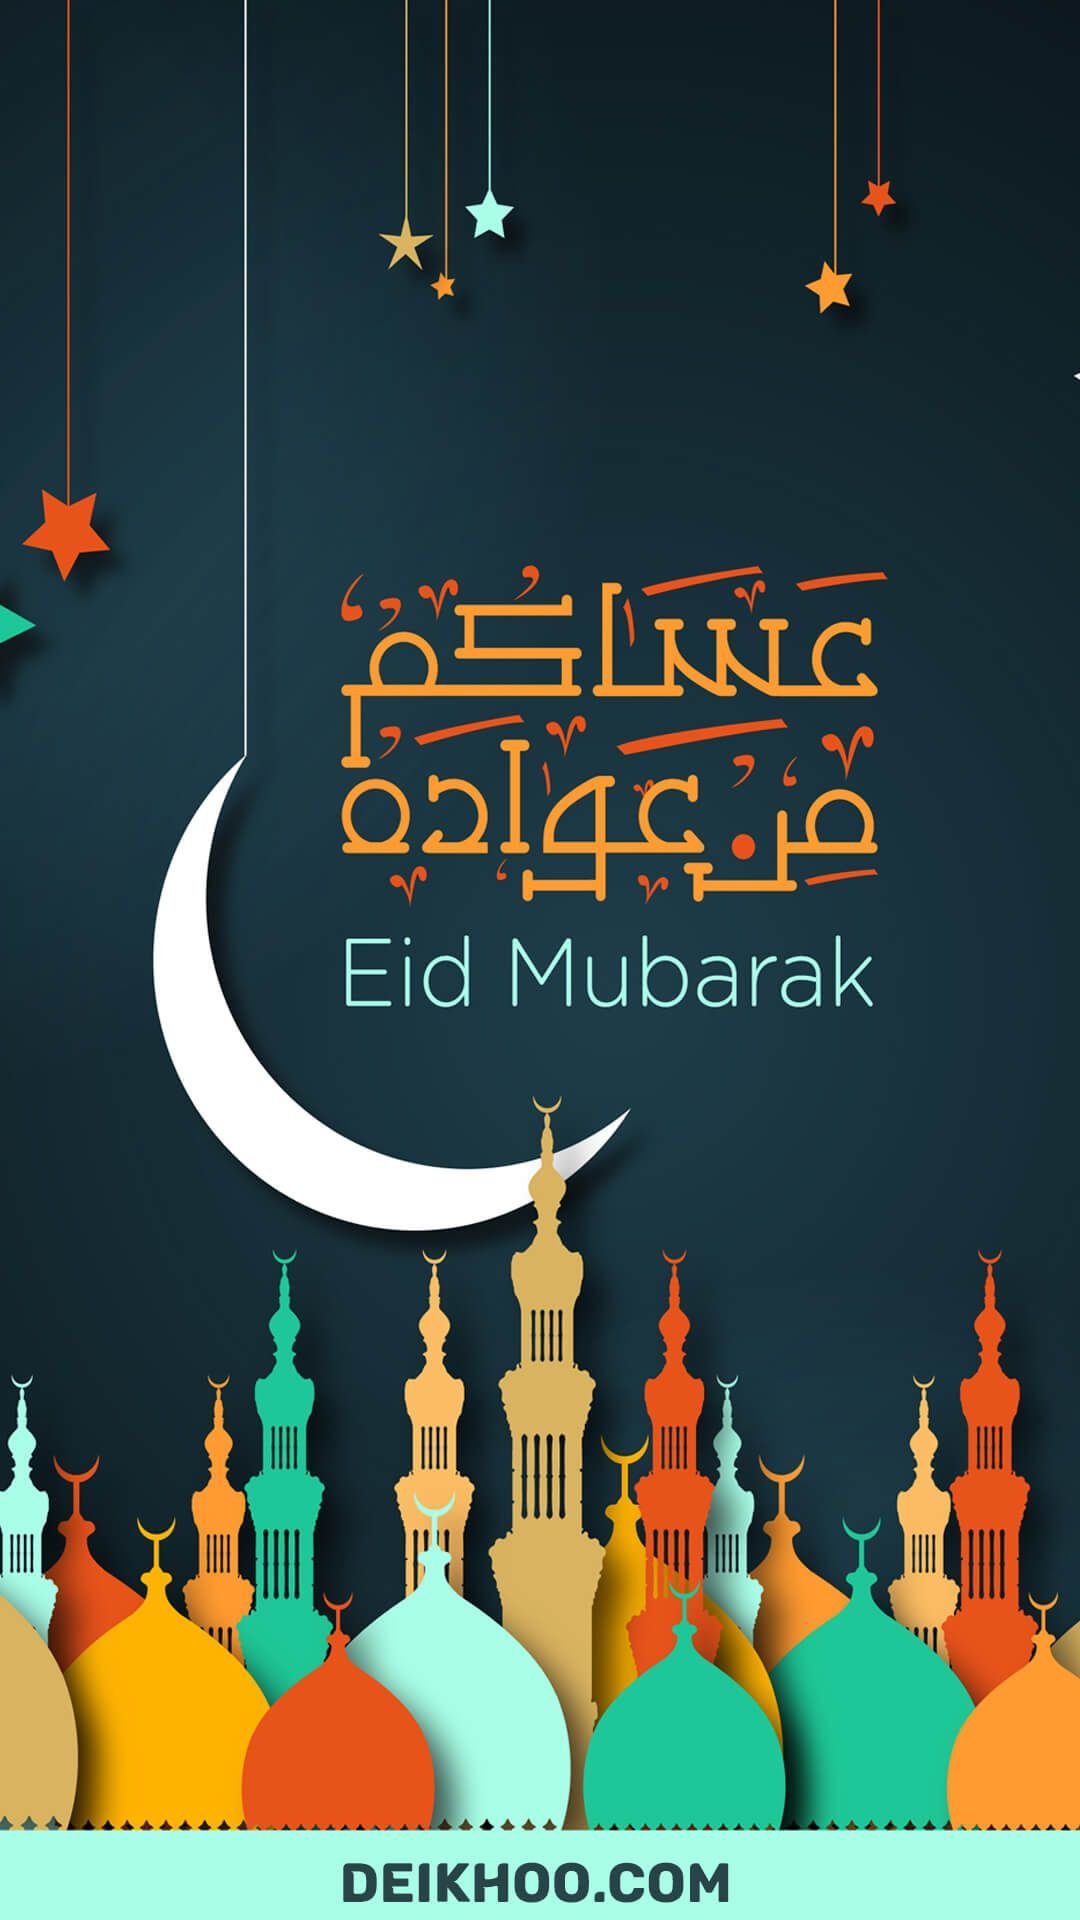 Eid mubarak HD wallpaper Eid al fitr HD wallpaper by SHAHBAZRAZVI on  DeviantArt